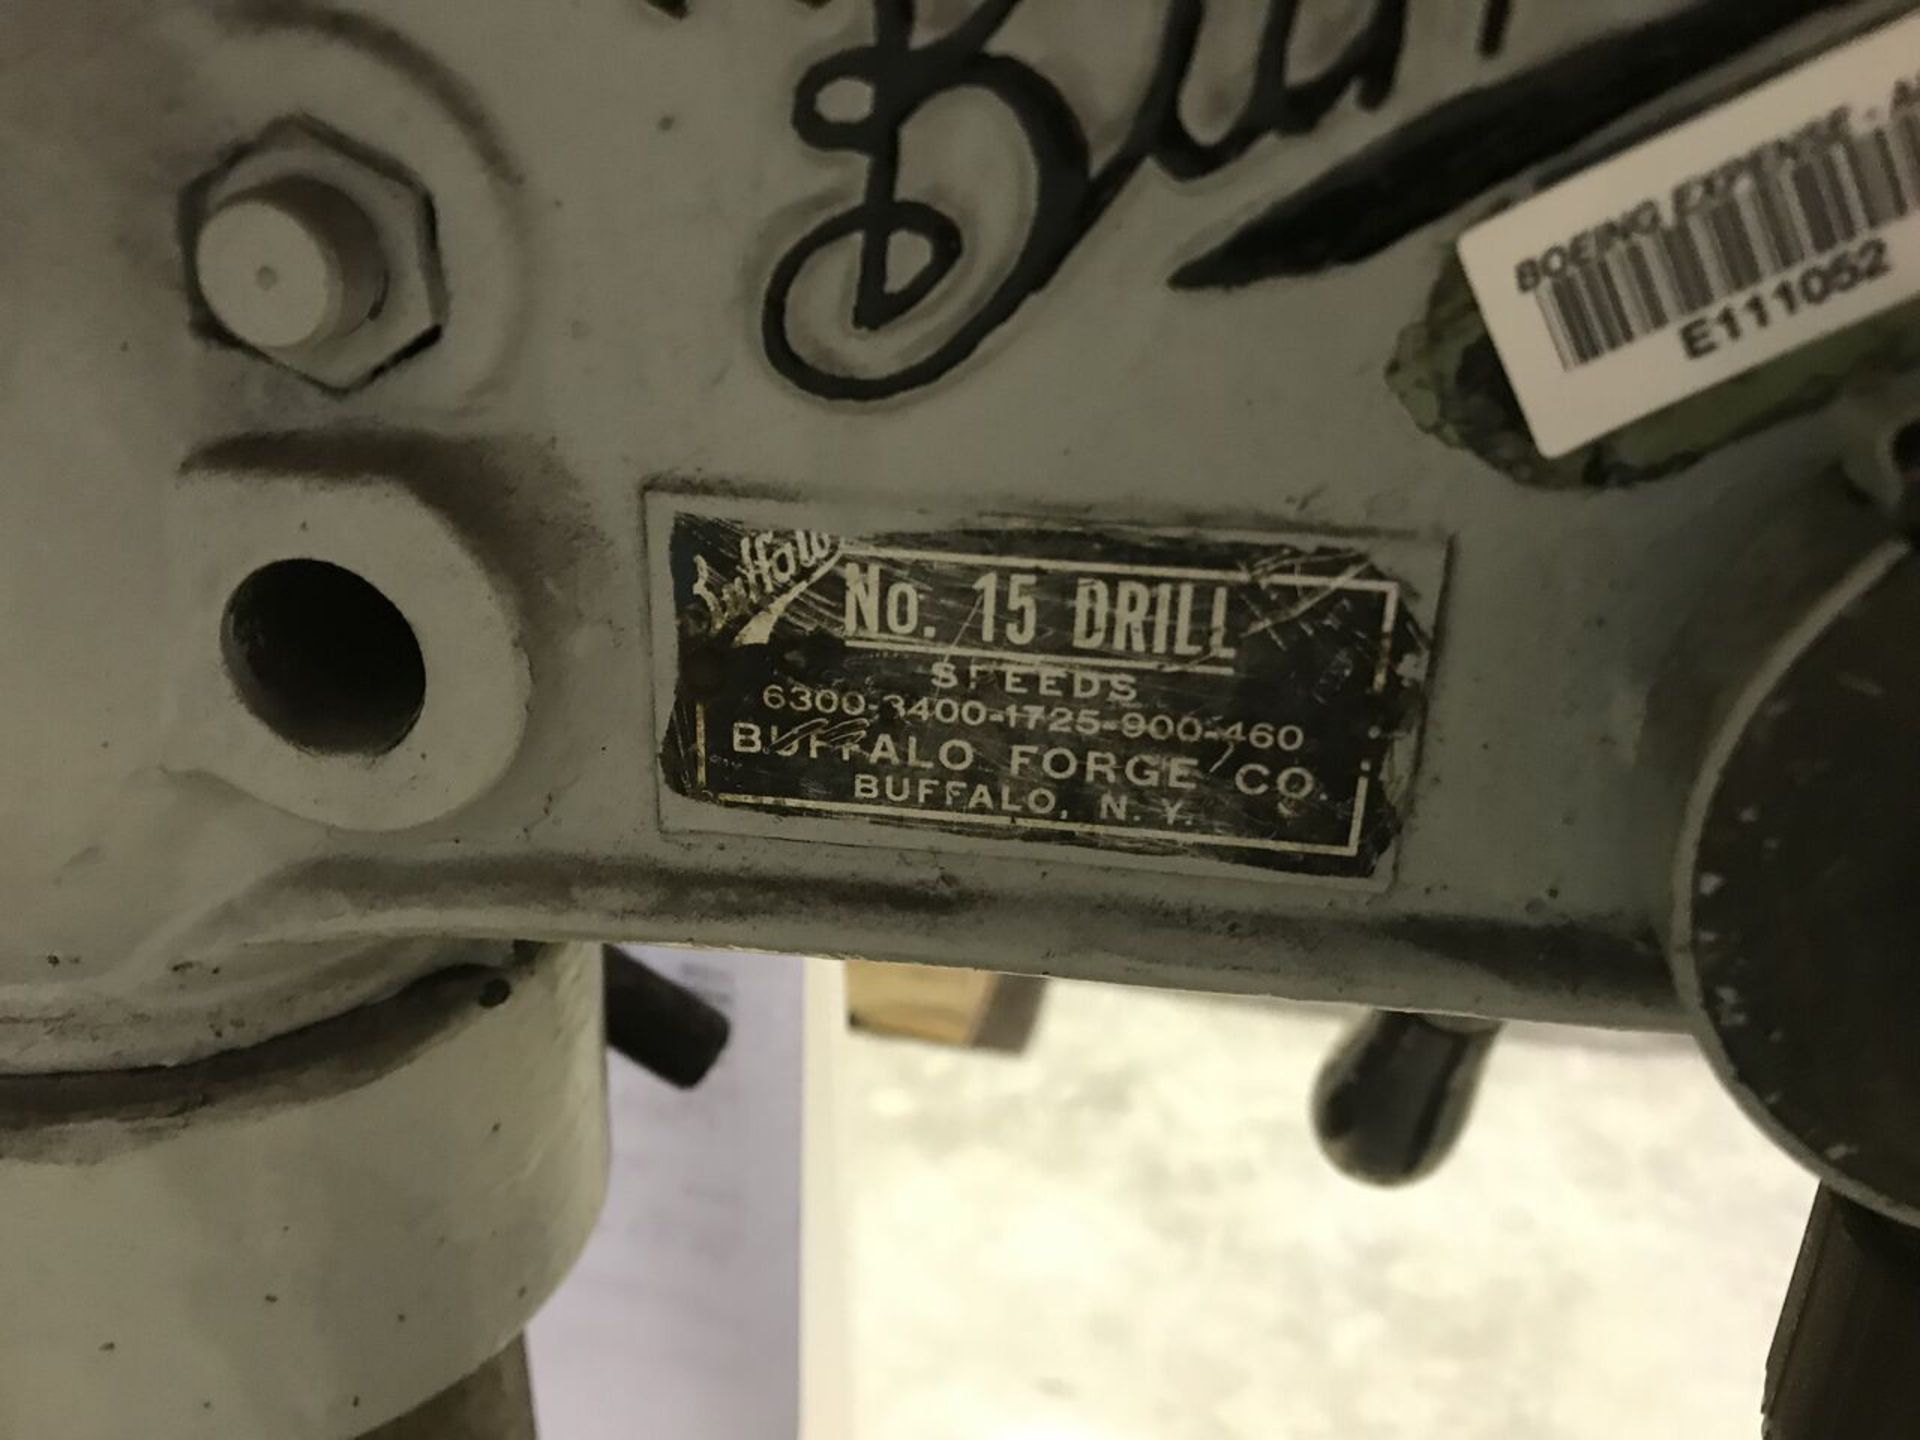 Buffalo "No. 15" Drill Press; Rigging Fee: $35 - Image 3 of 3